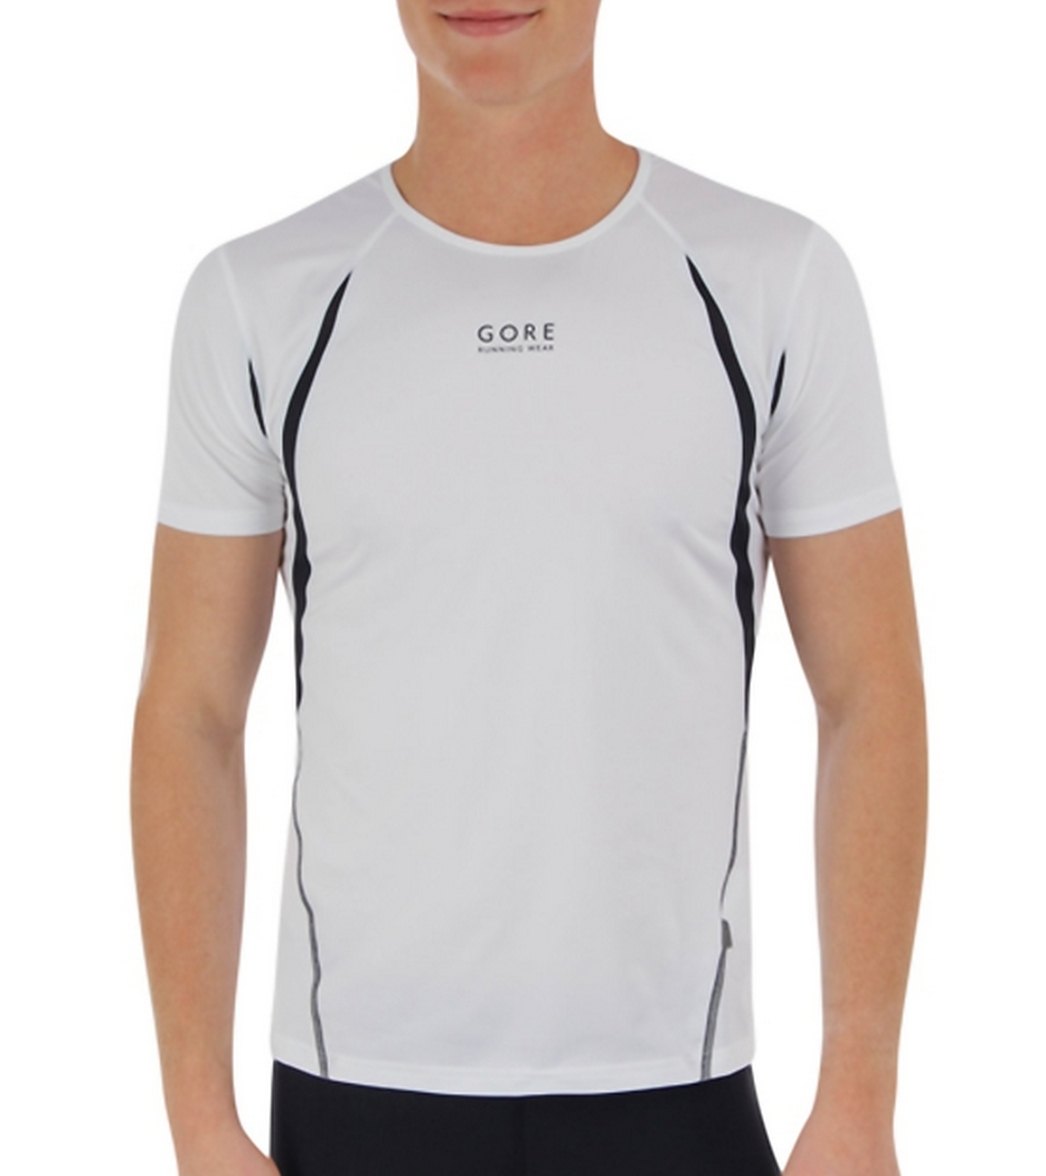 Gore Men's Air 2.0 Short Sleeve Running Shirt - White/Black Small Polyester - Swimoutlet.com